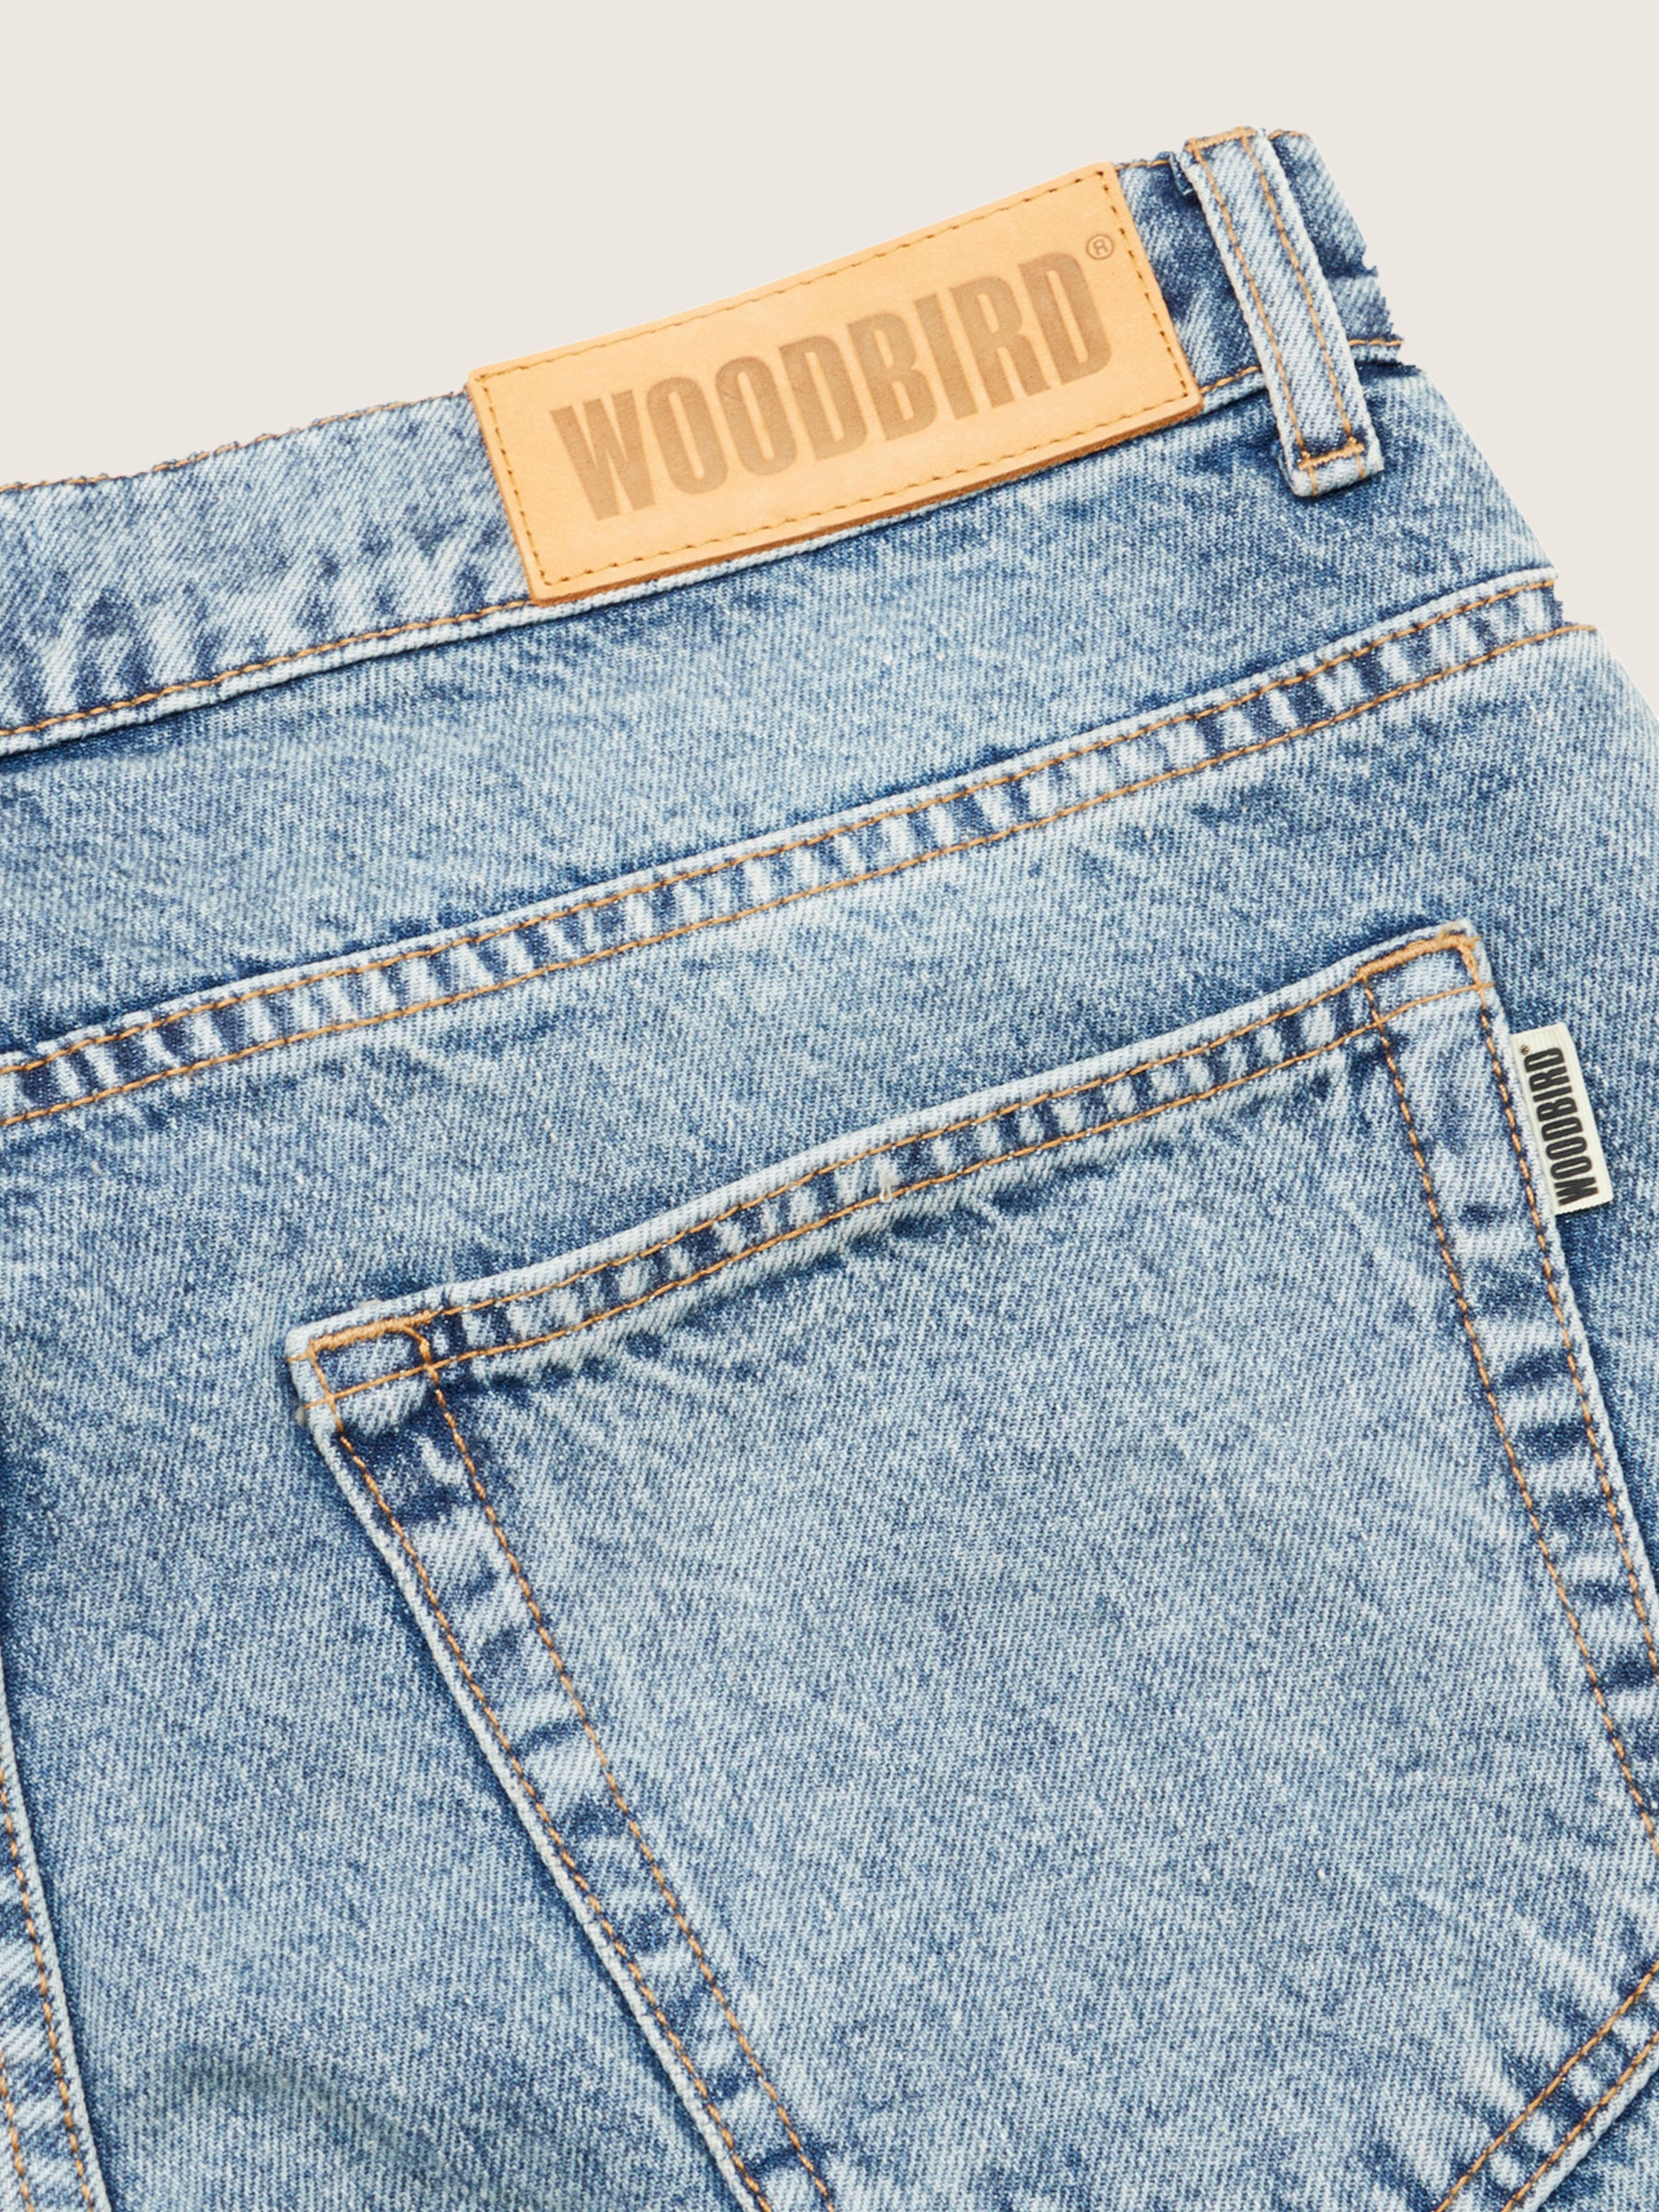 Woodbird WBWik Vectorblue Jeans Jeans Mid Blue